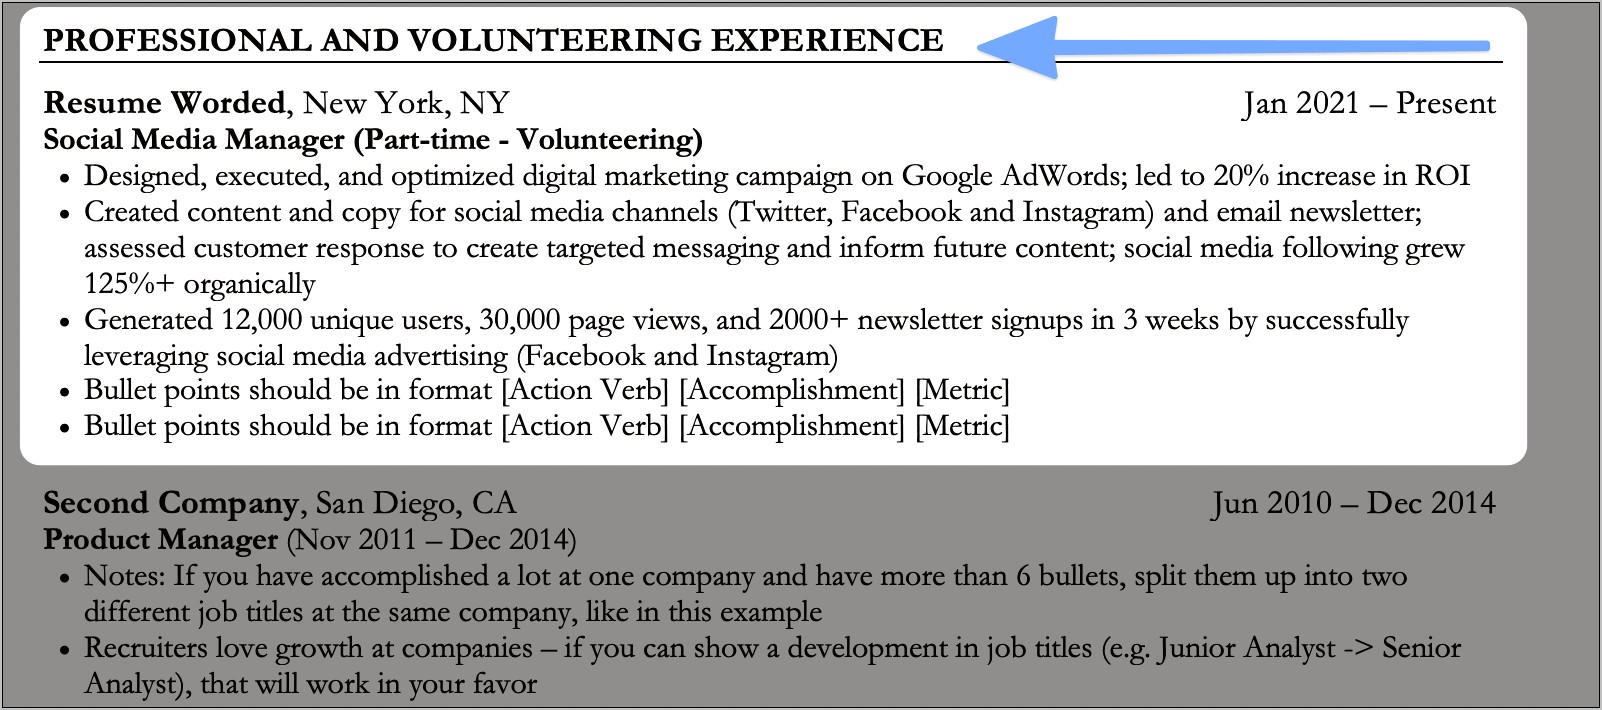 Resume Combine Work And Volunteer Experience